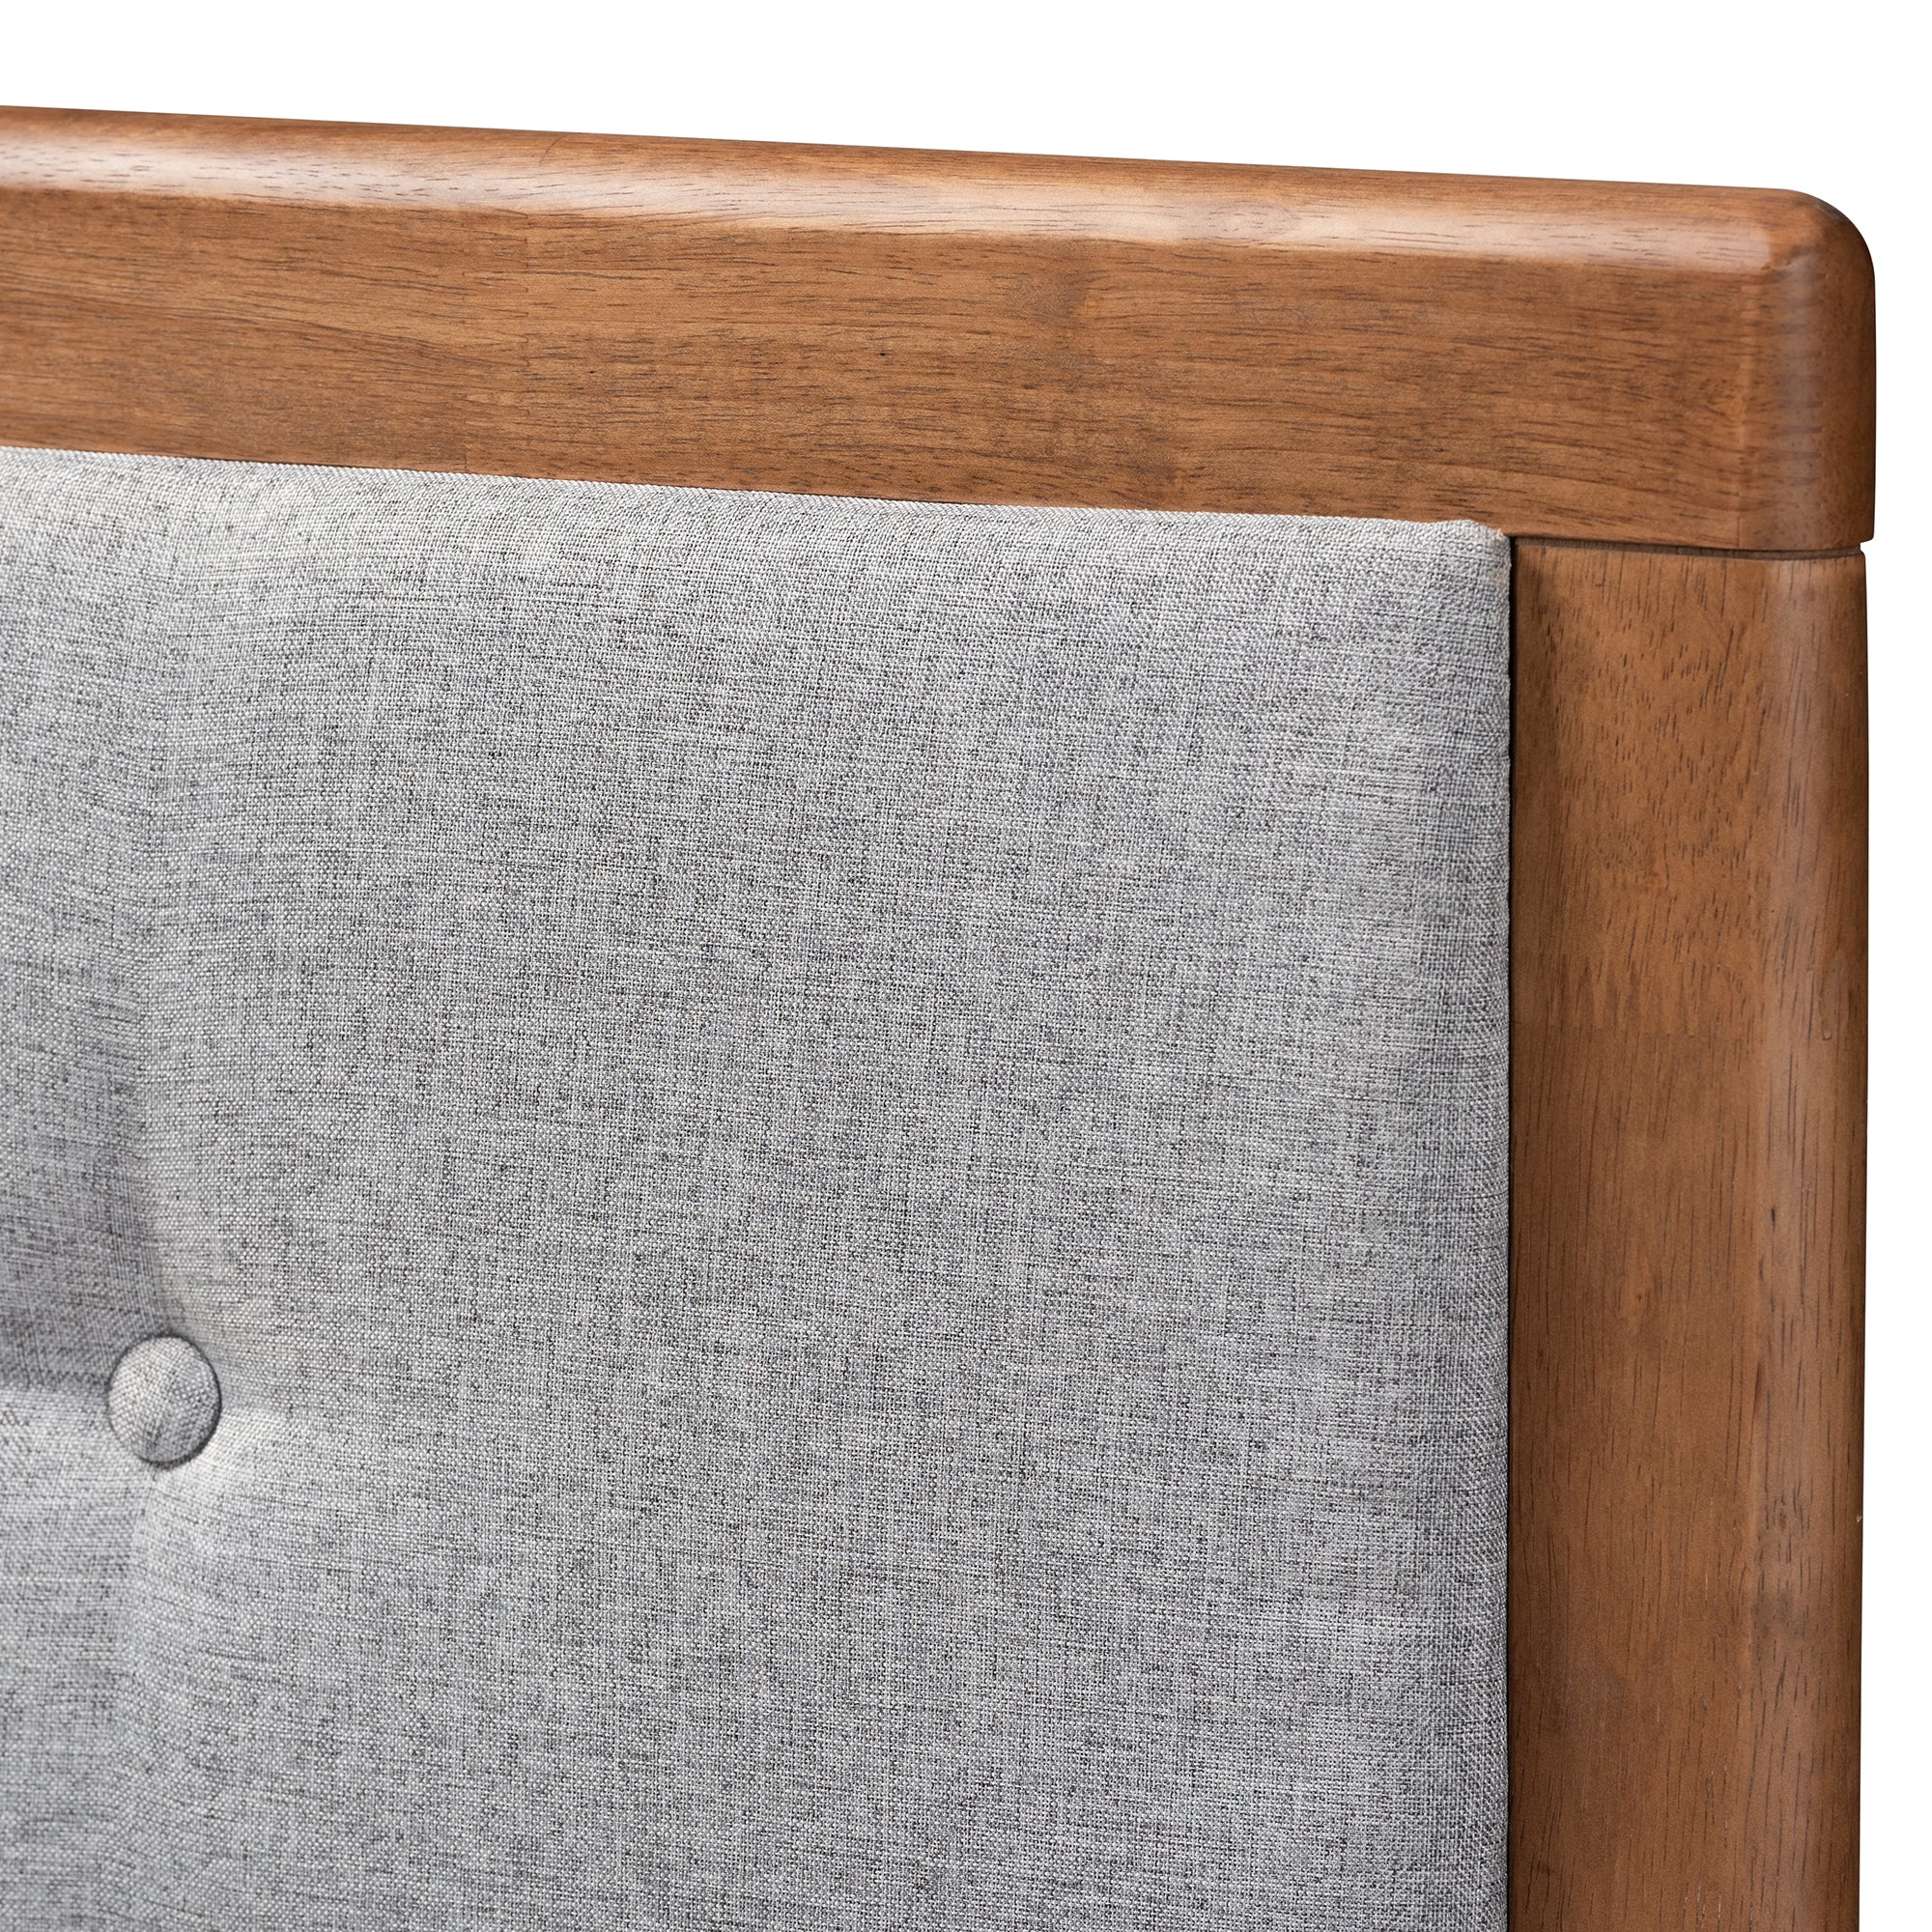 Cosma Modern Bed 4-Drawer-Bed-Baxton Studio - WI-Wall2Wall Furnishings